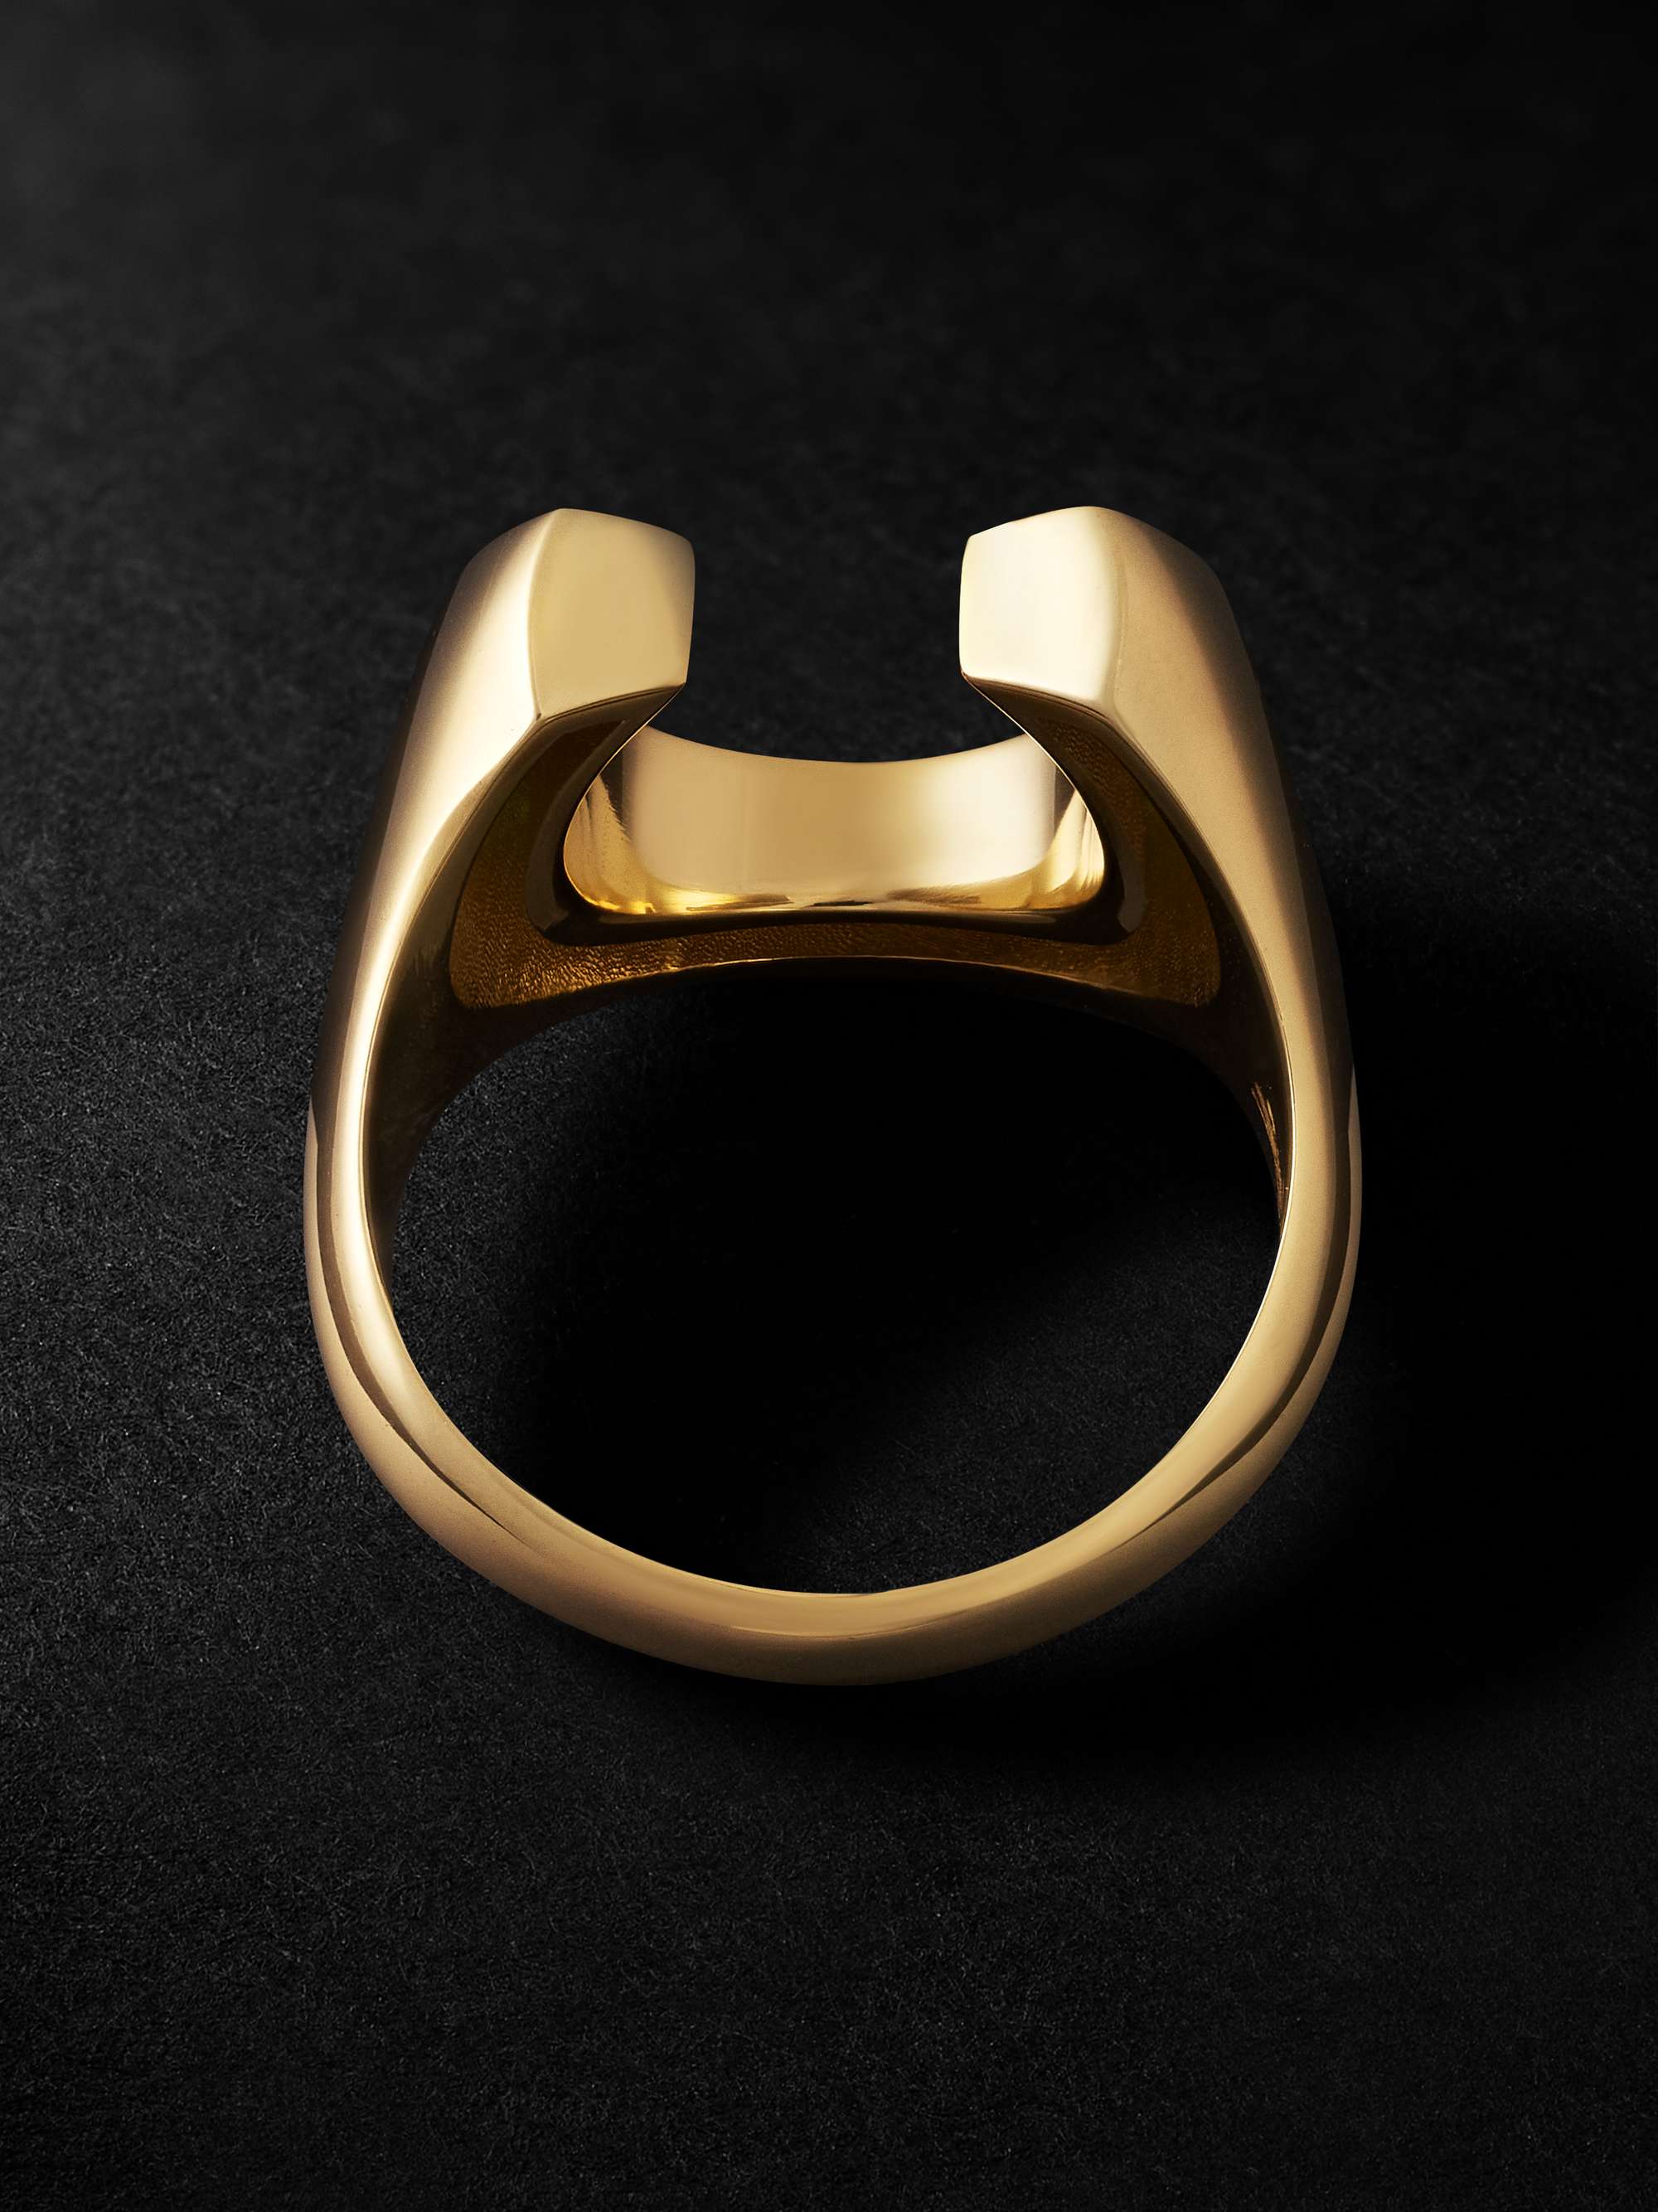 JACQUIE AICHE Horseshoe Gold Emerald Ring